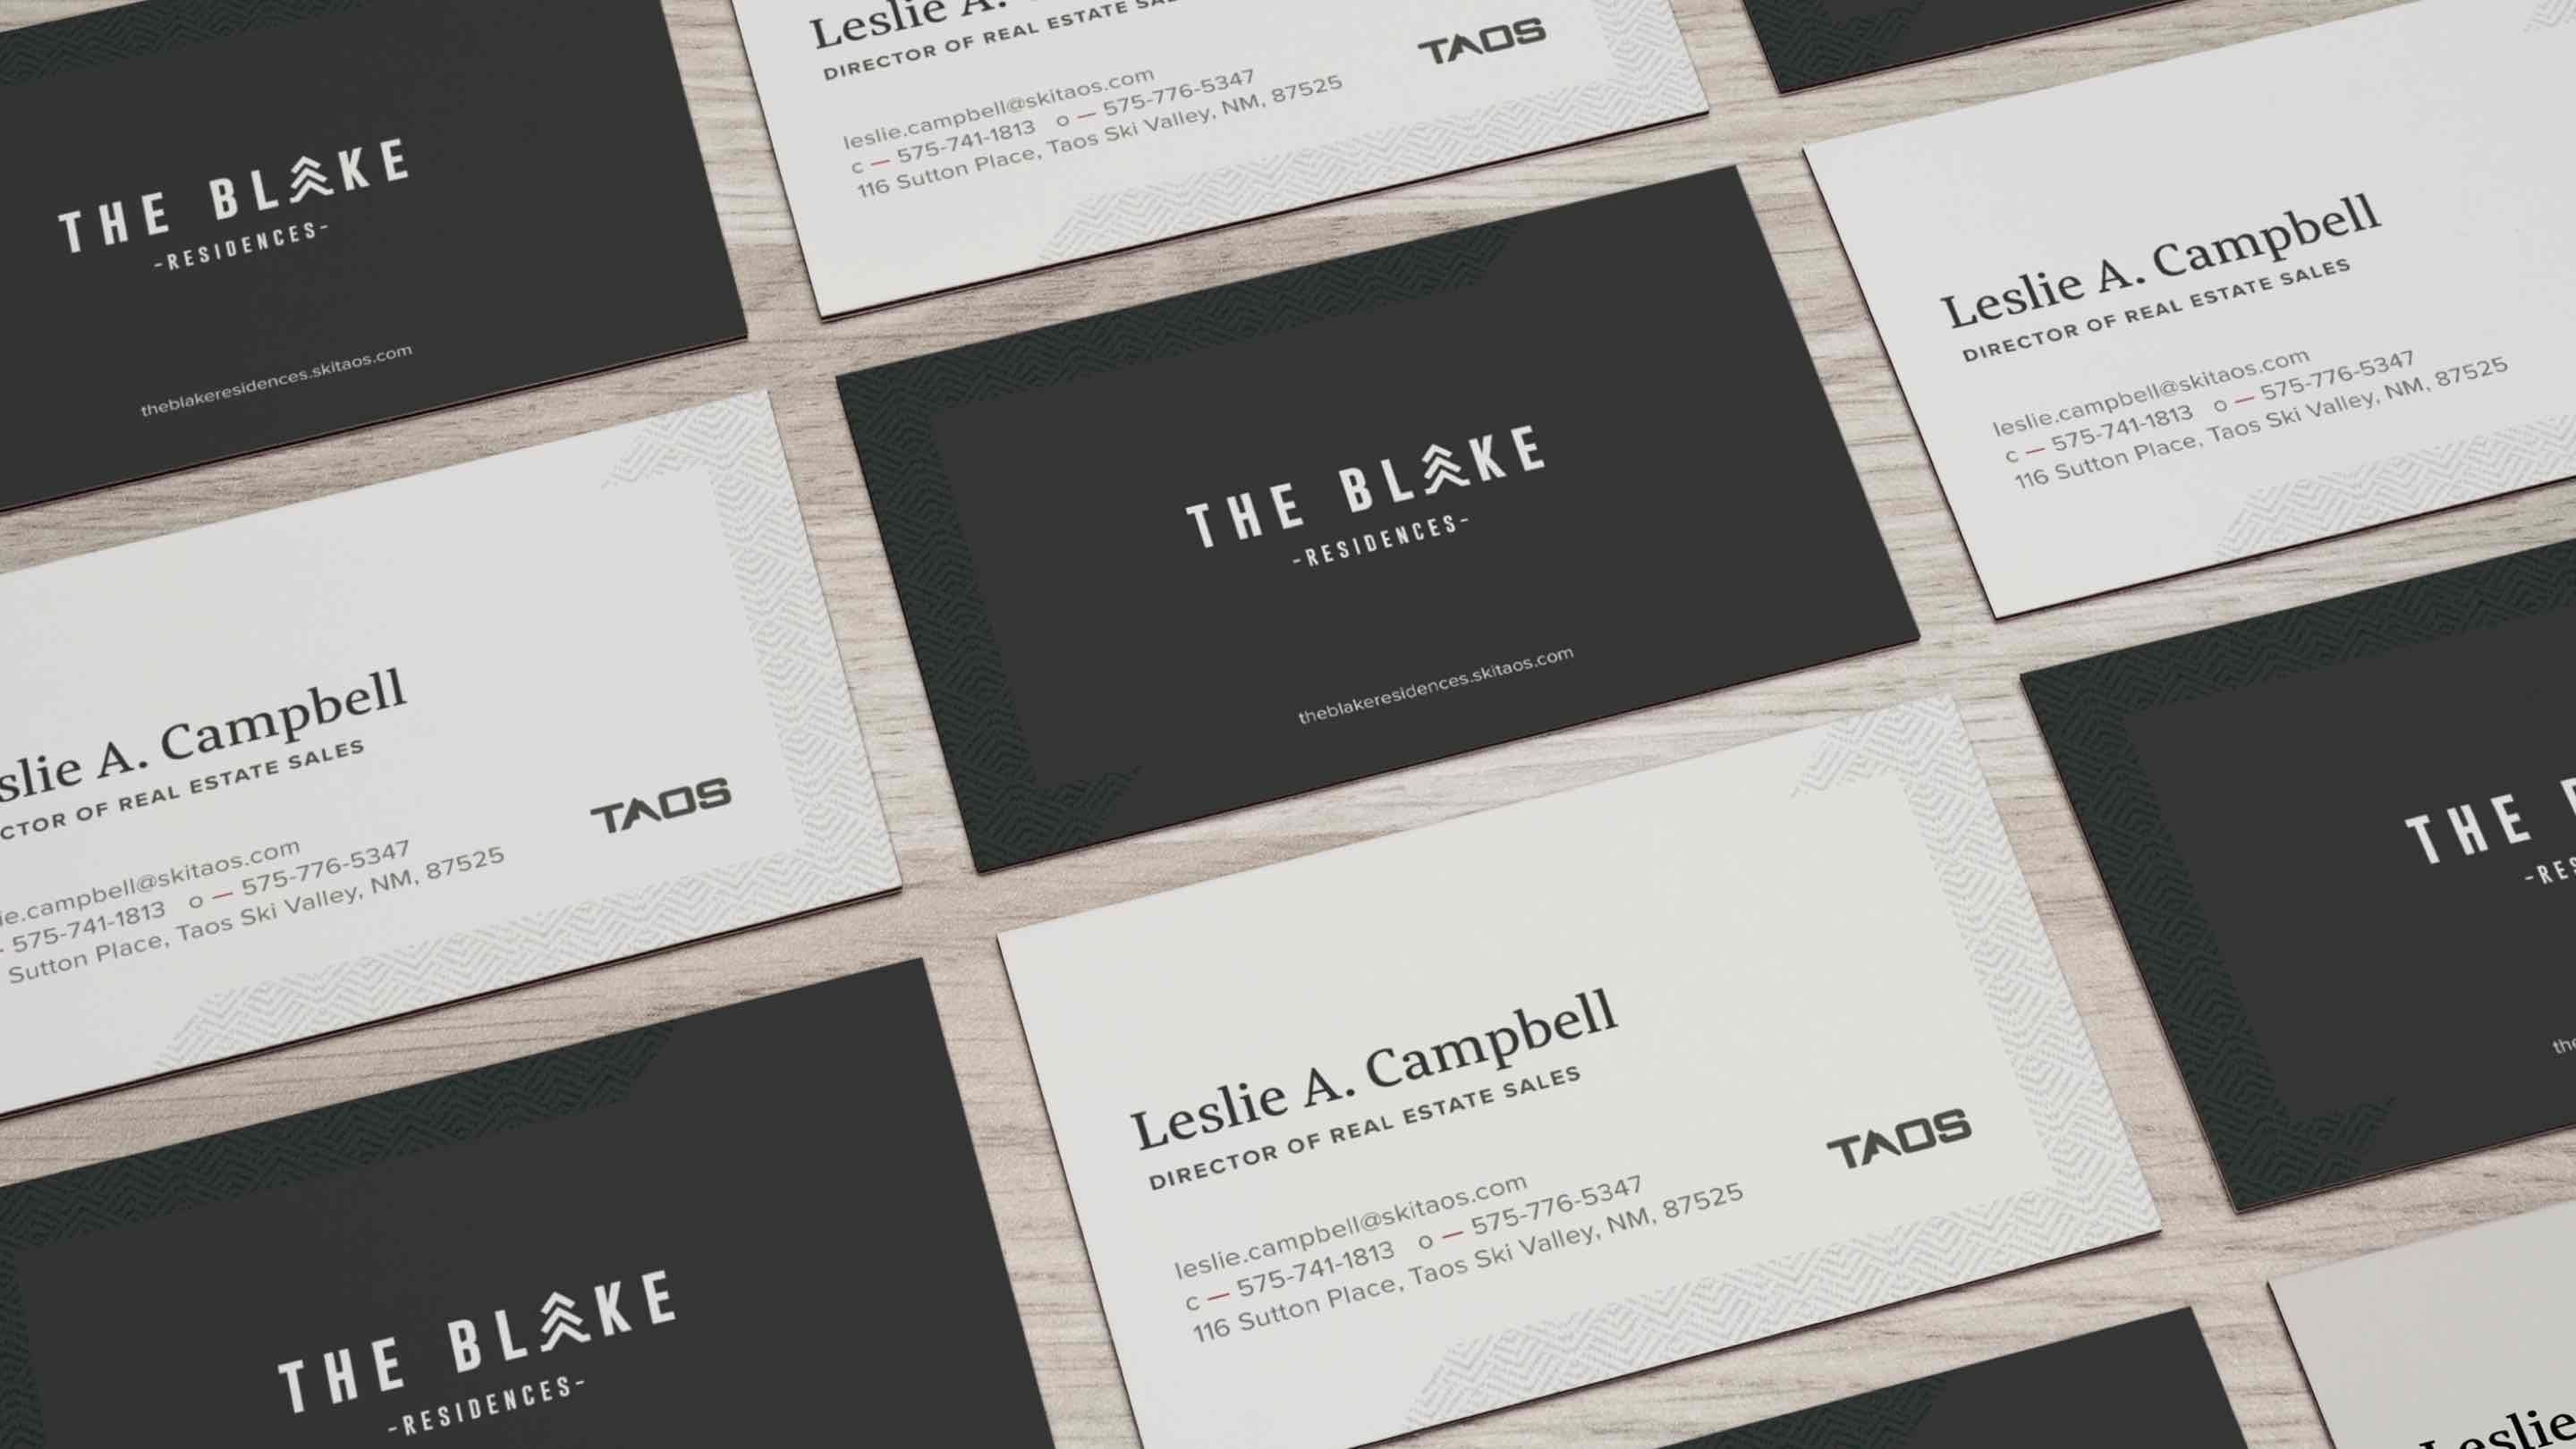 Blake Residences business cards